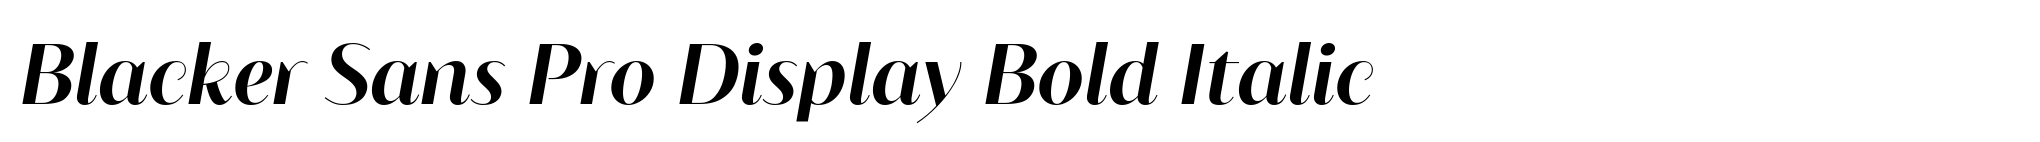 Blacker Sans Pro Display Bold Italic image